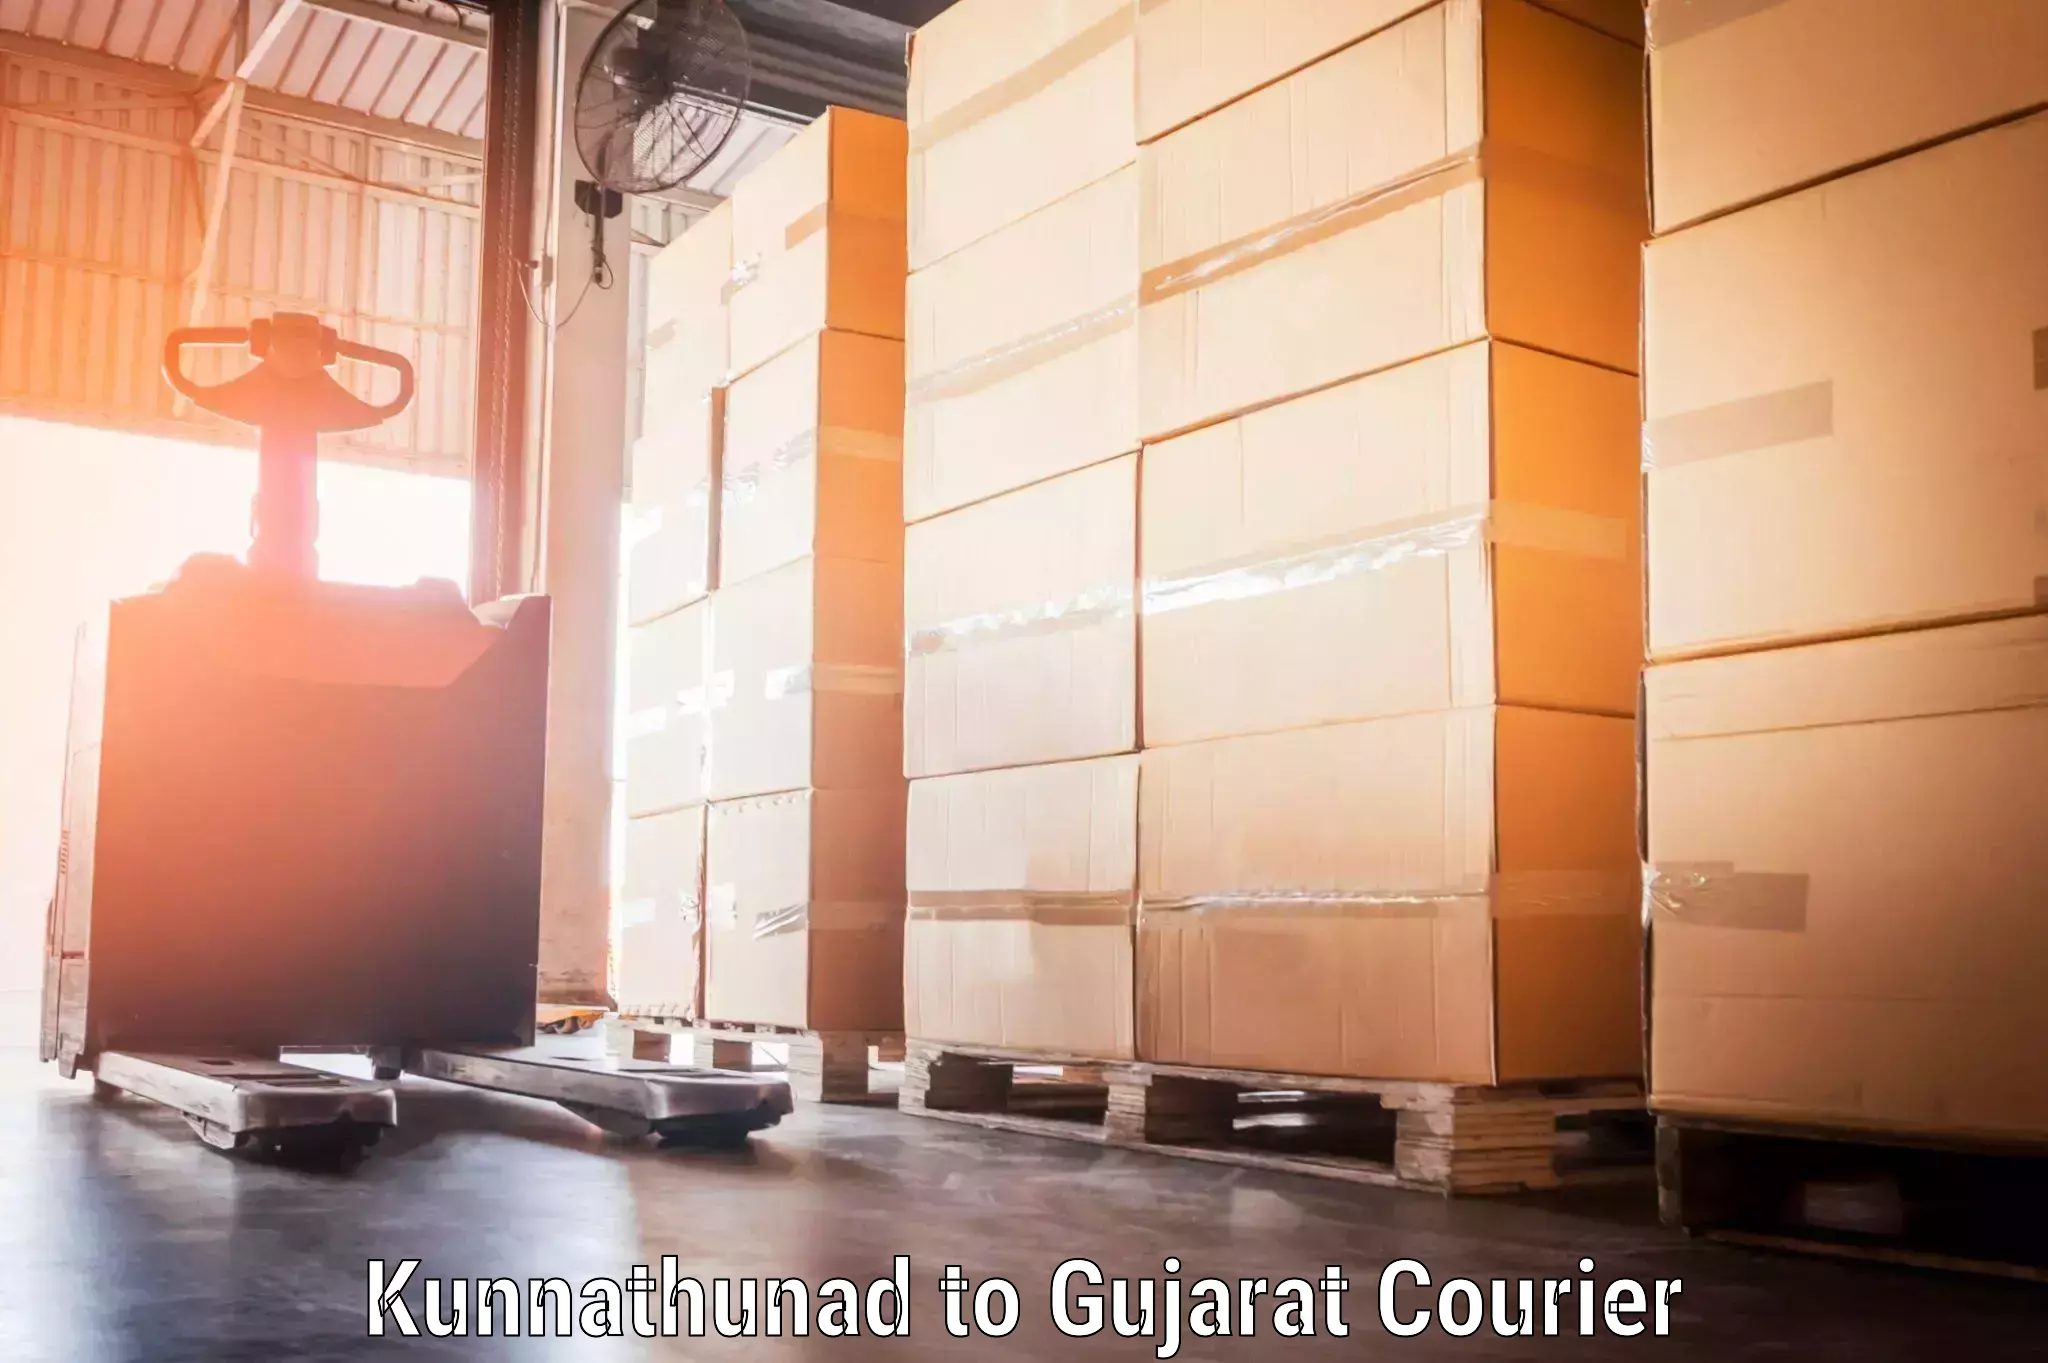 Baggage relocation service Kunnathunad to Ahmedabad